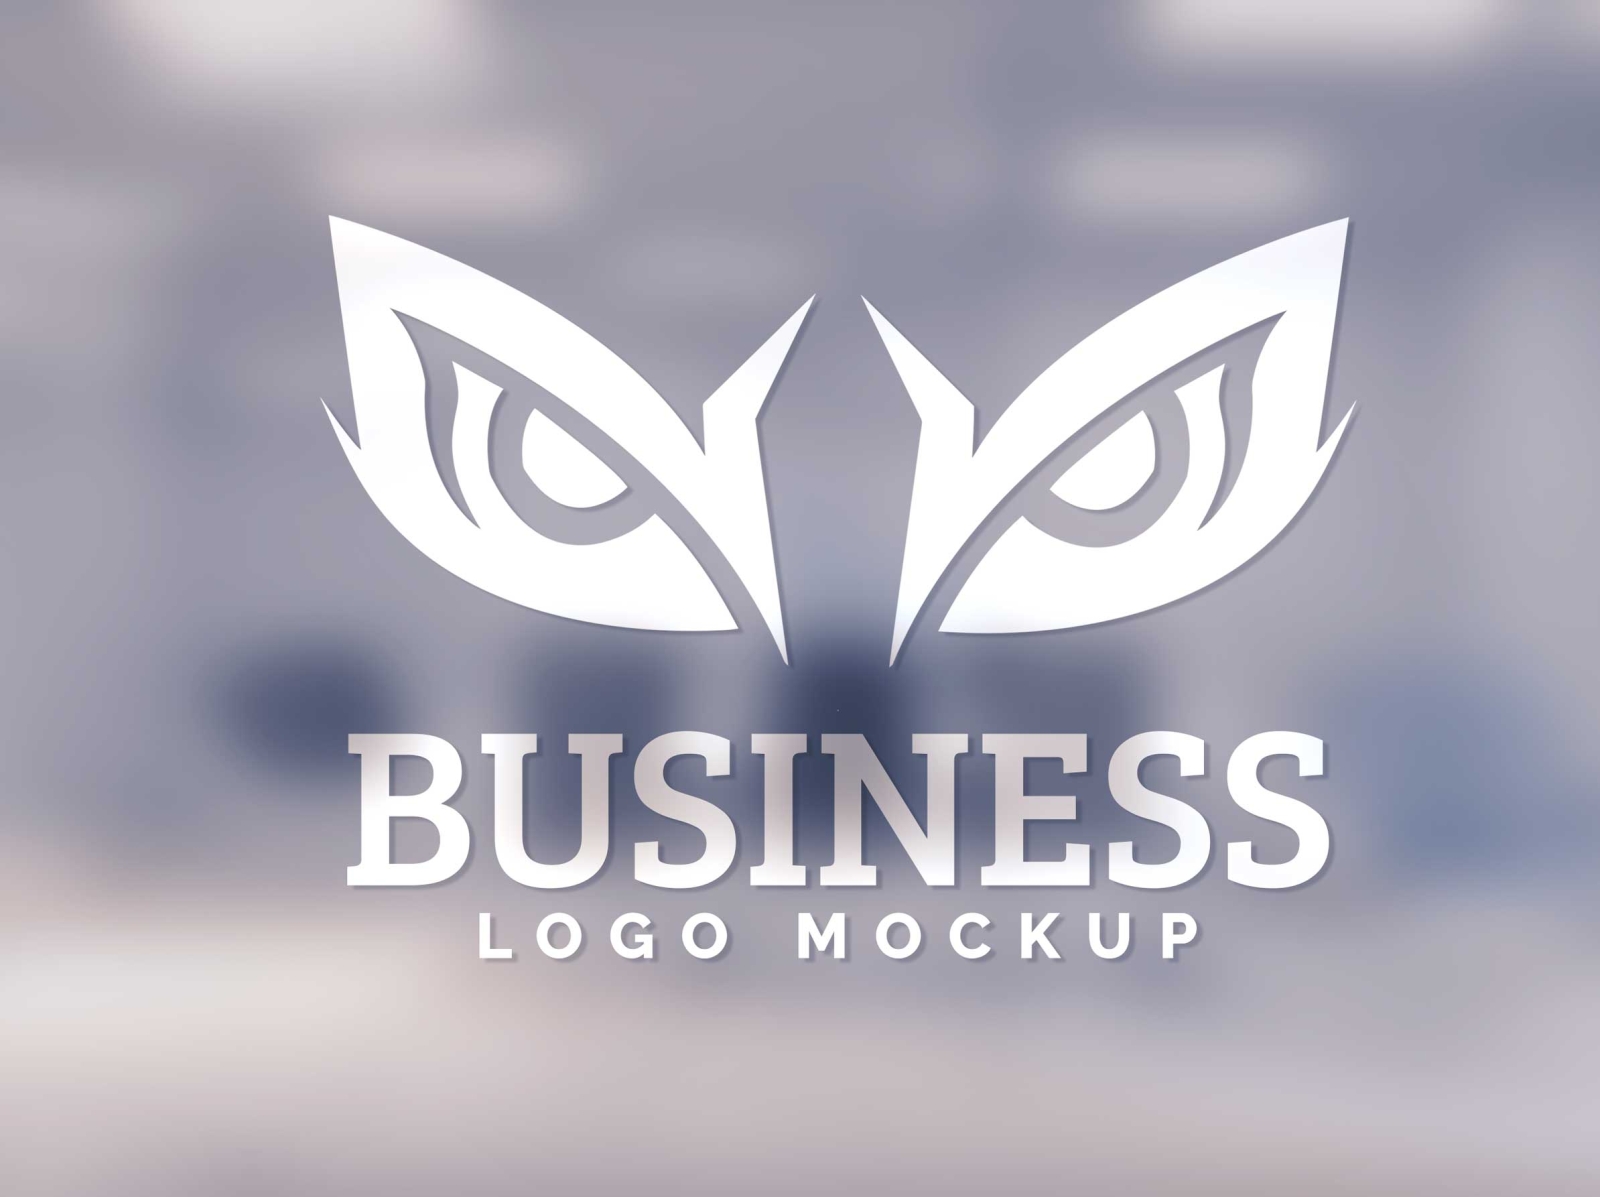 Download Free Blur Glass Wall Logo Mockup by Anuj Kumar on Dribbble